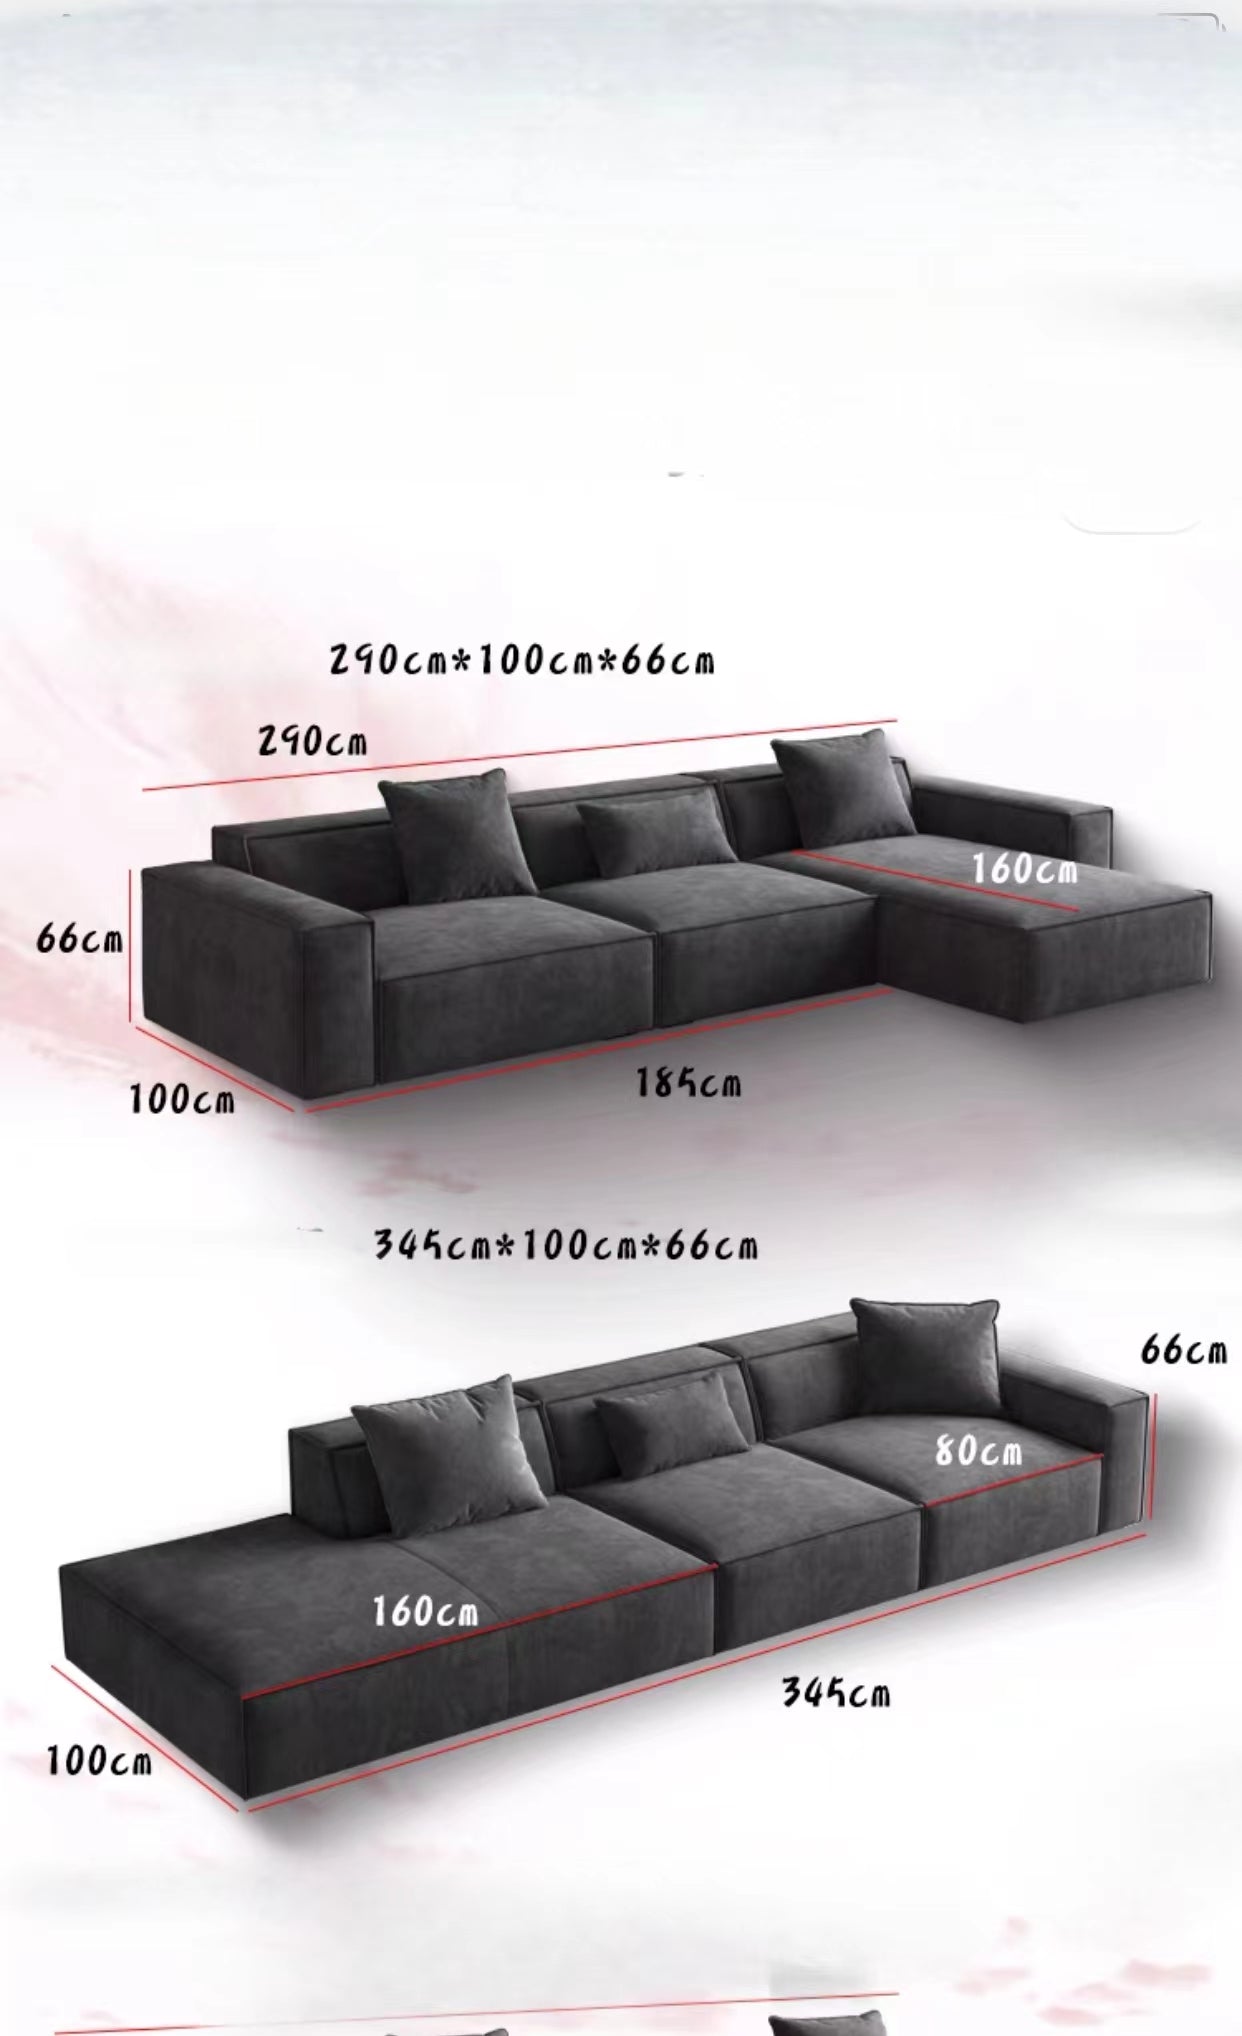 Daiyan Upholstered Sectional - 4 Seasons Home Gadgets